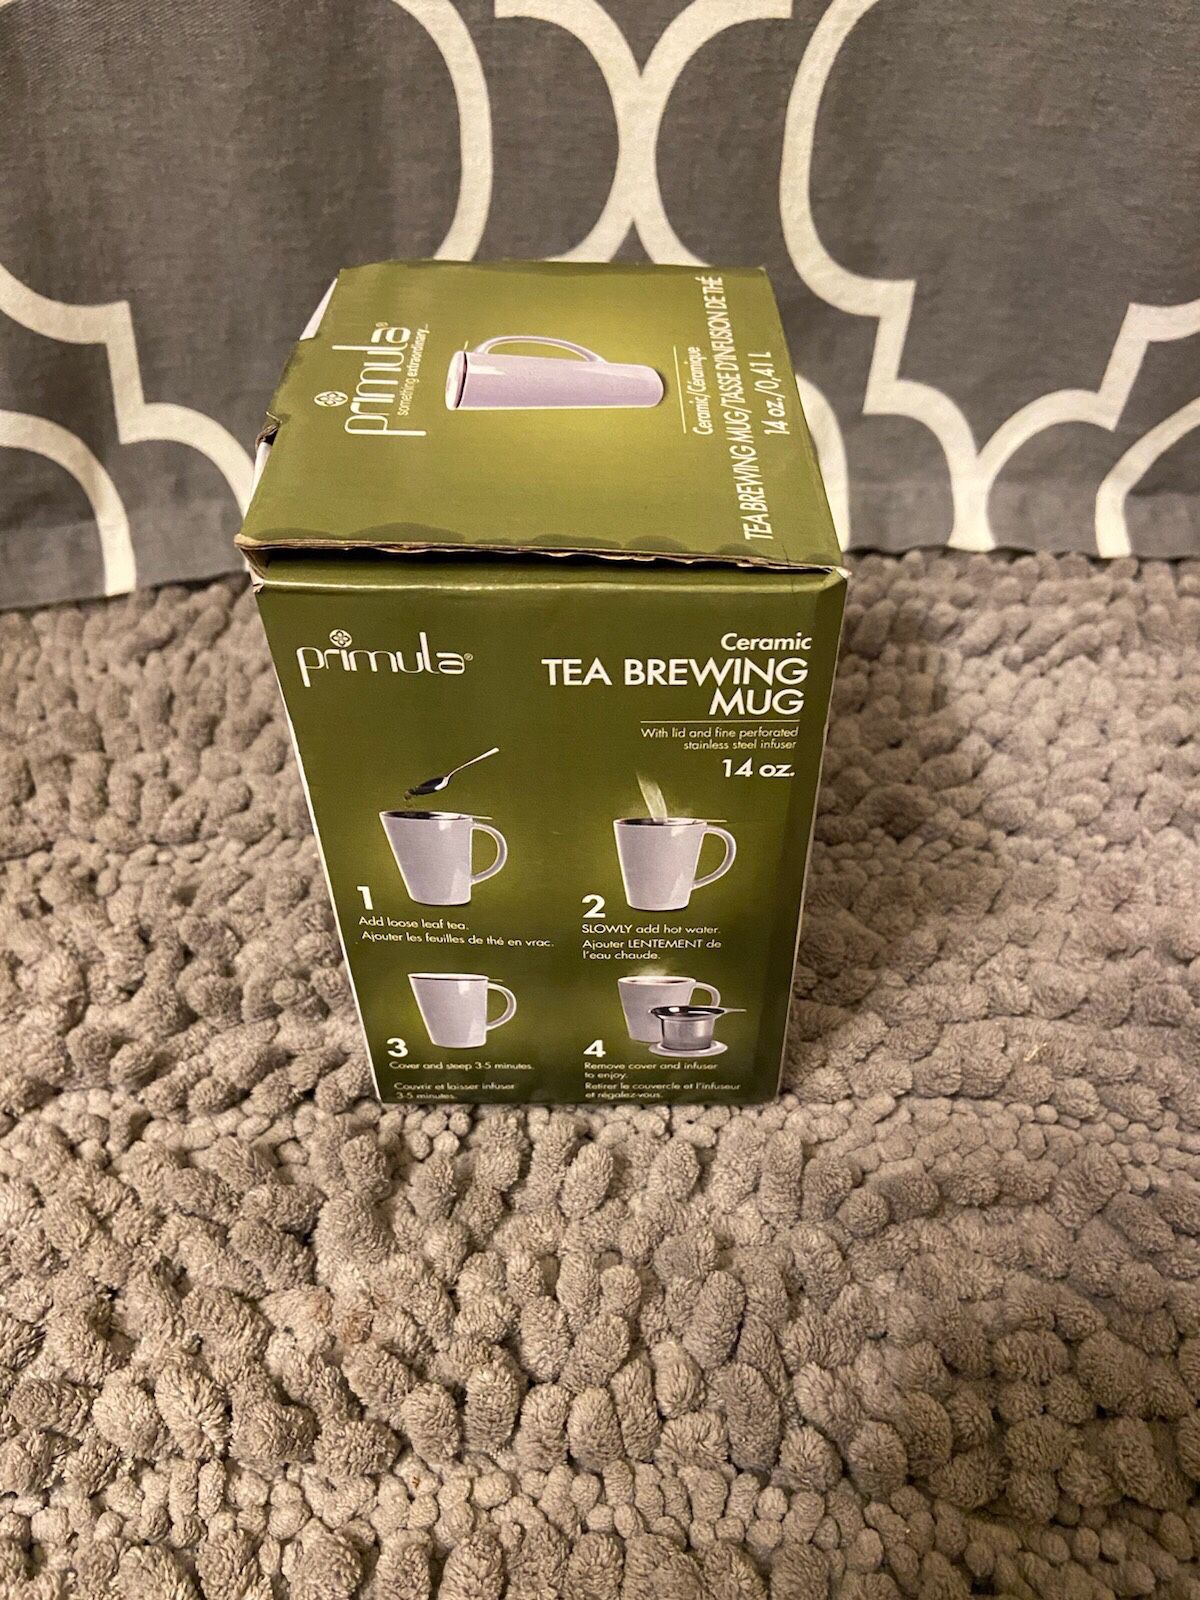 Brand new Primula tea brewing mug and accessories